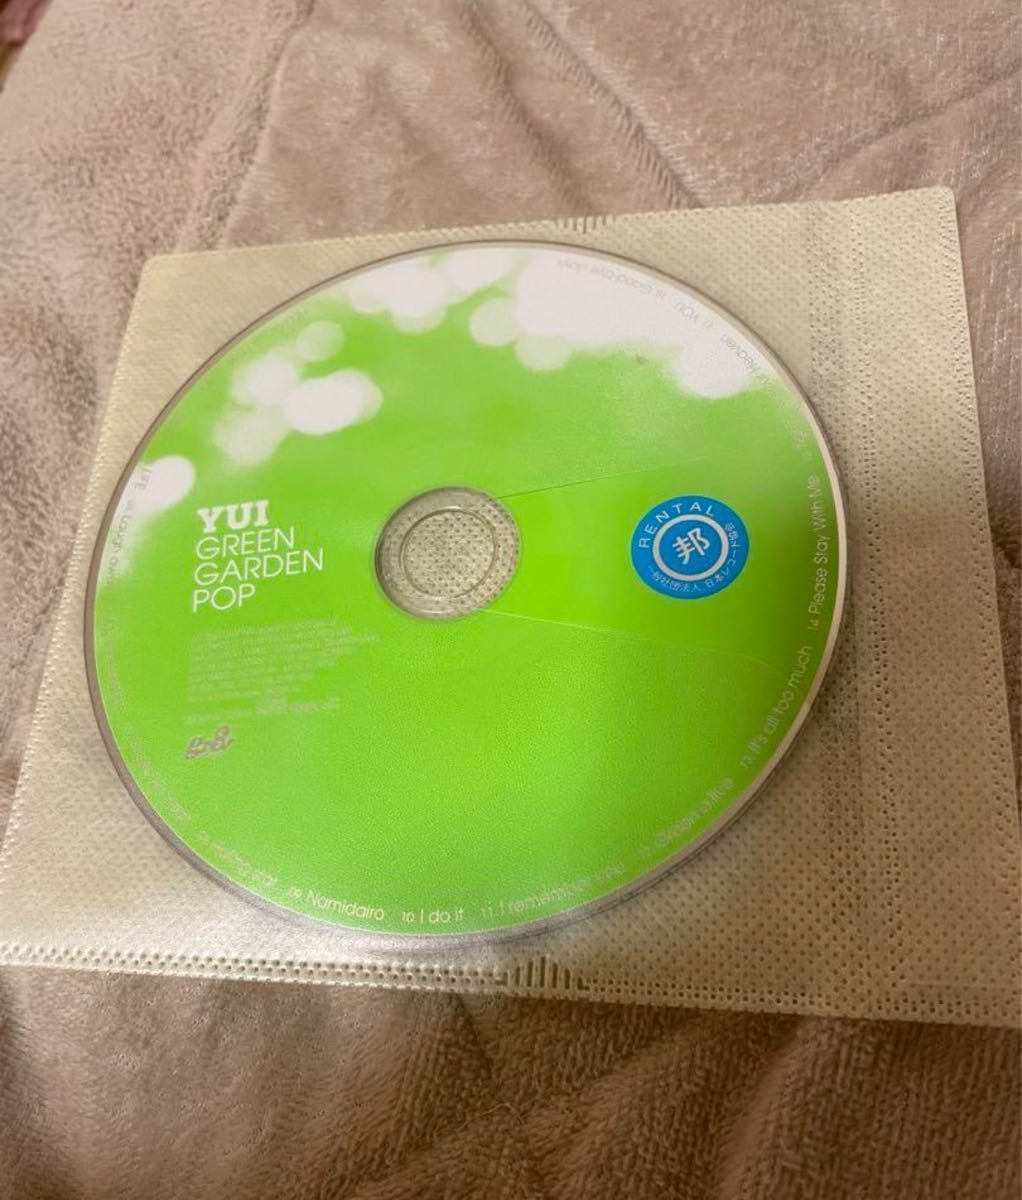 Yui GREEN GARDEN POP CD